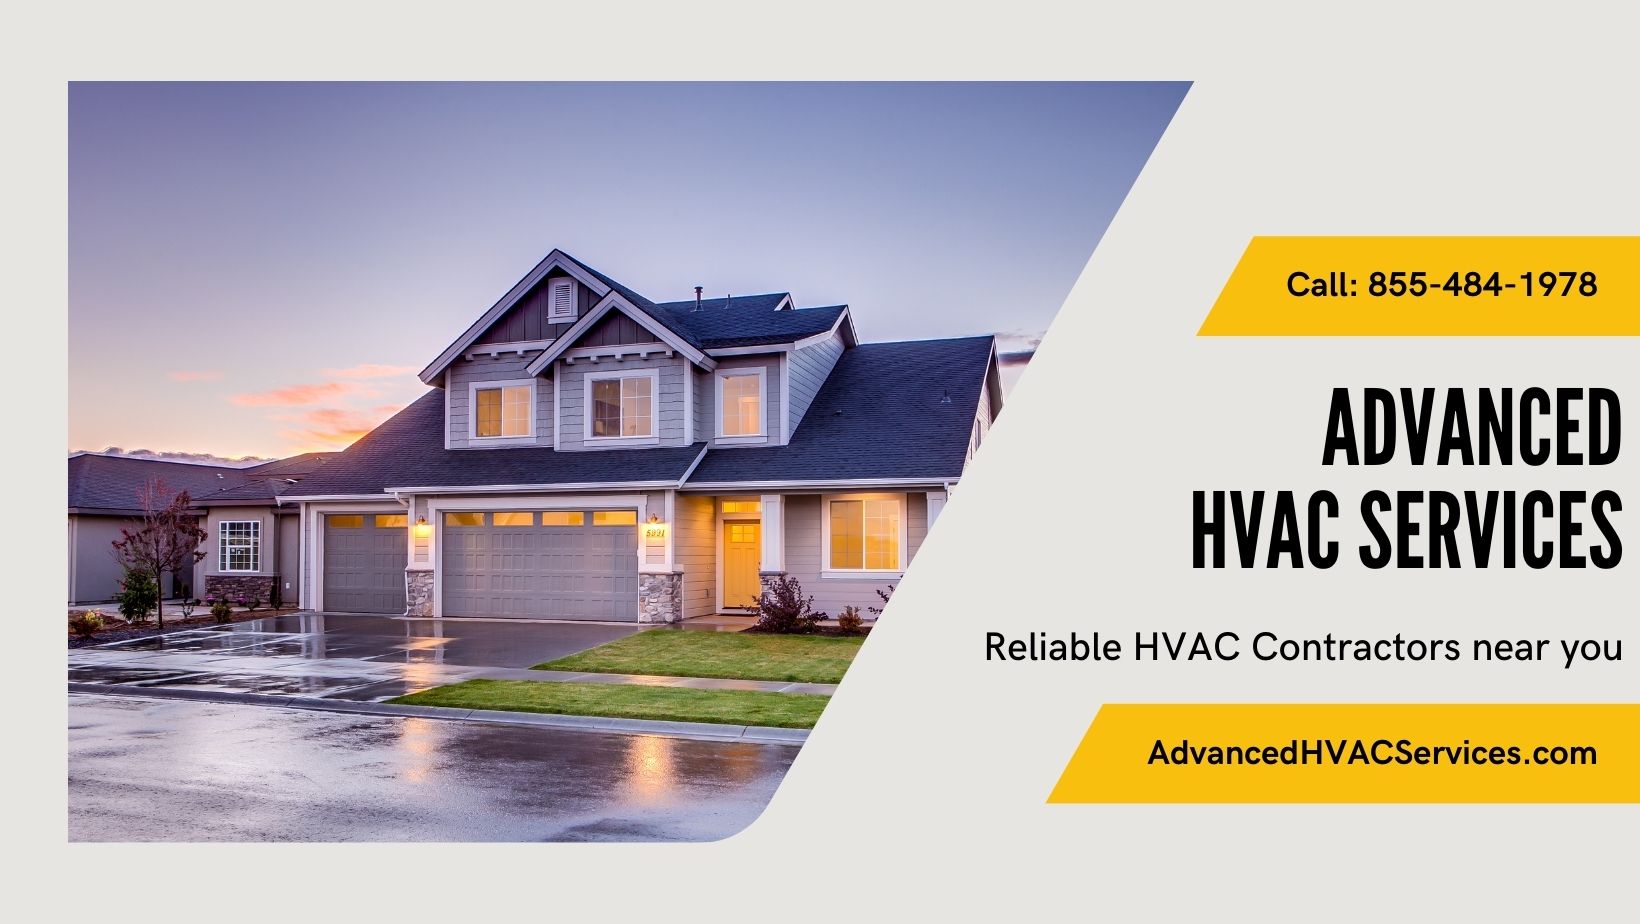 Advanced HVAC Services Facebook